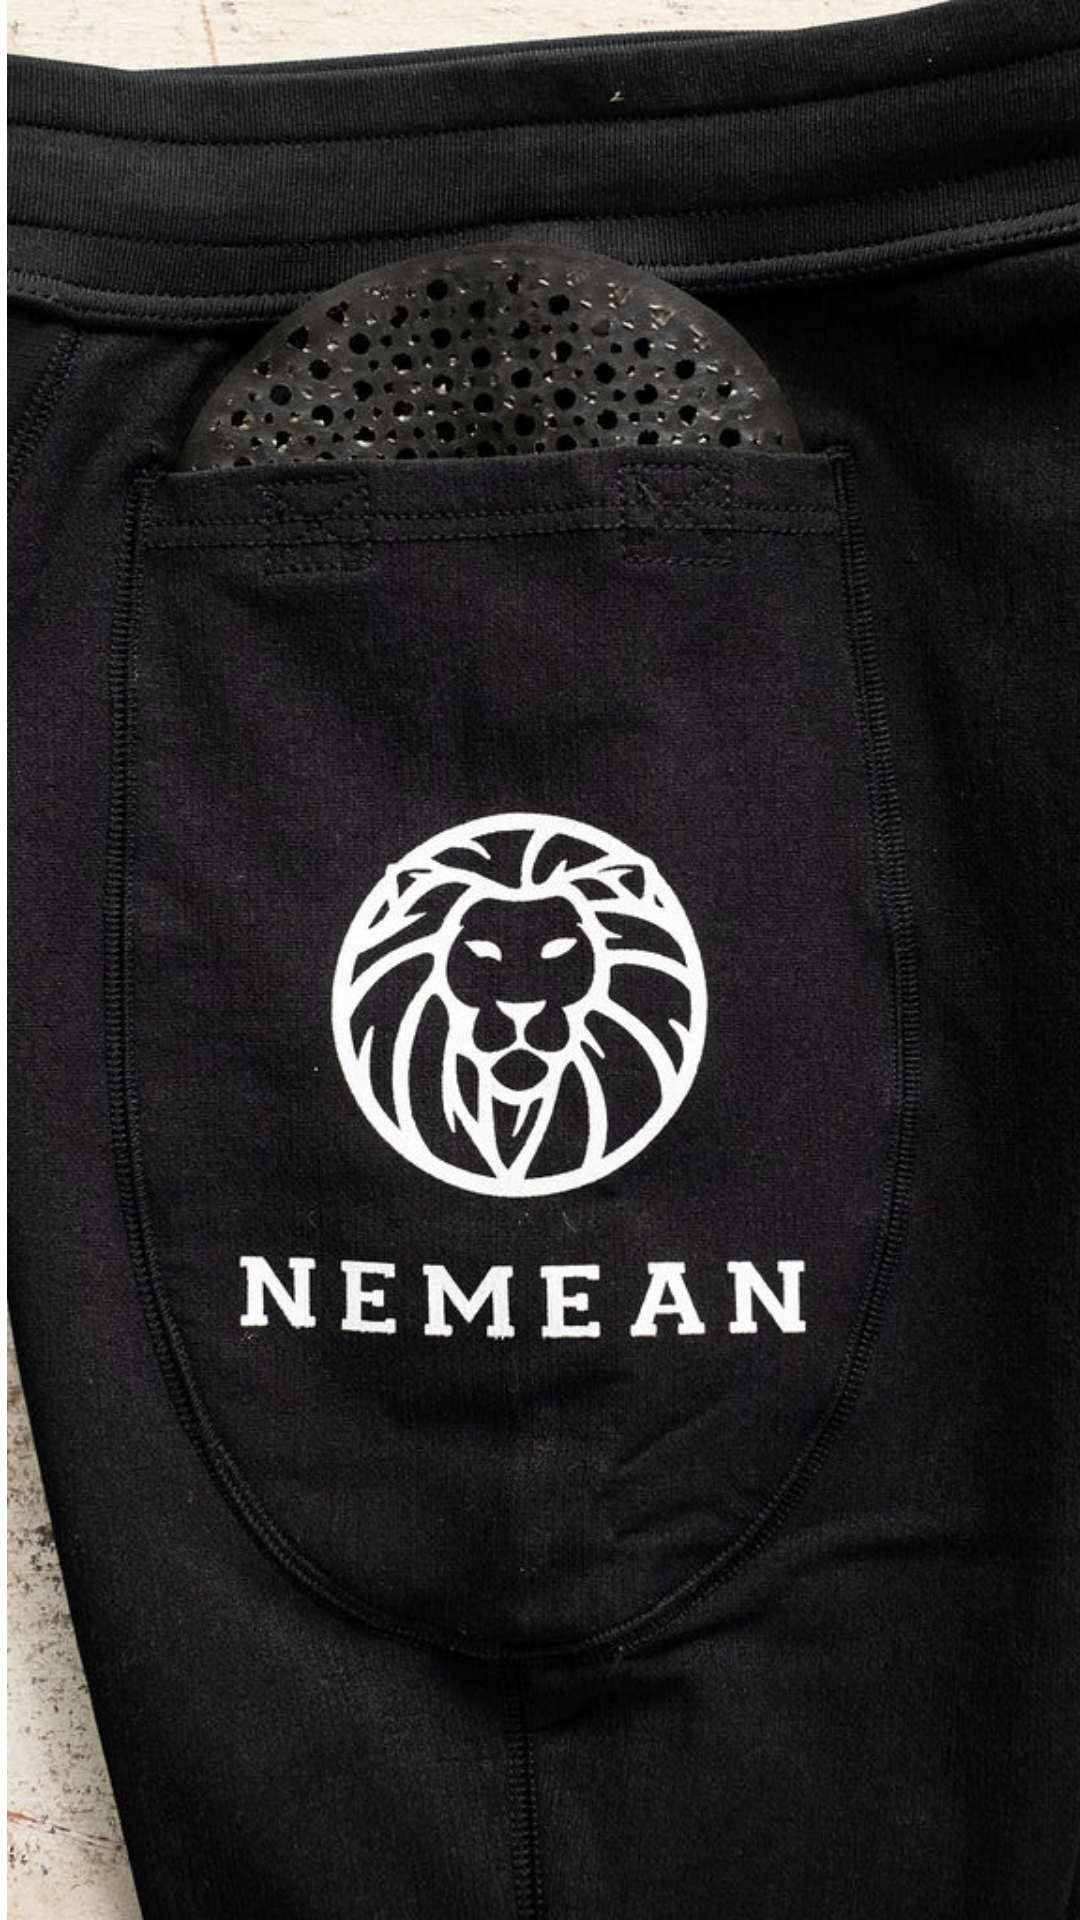 Nemean Clothing | The Leon - Protective Undergarment